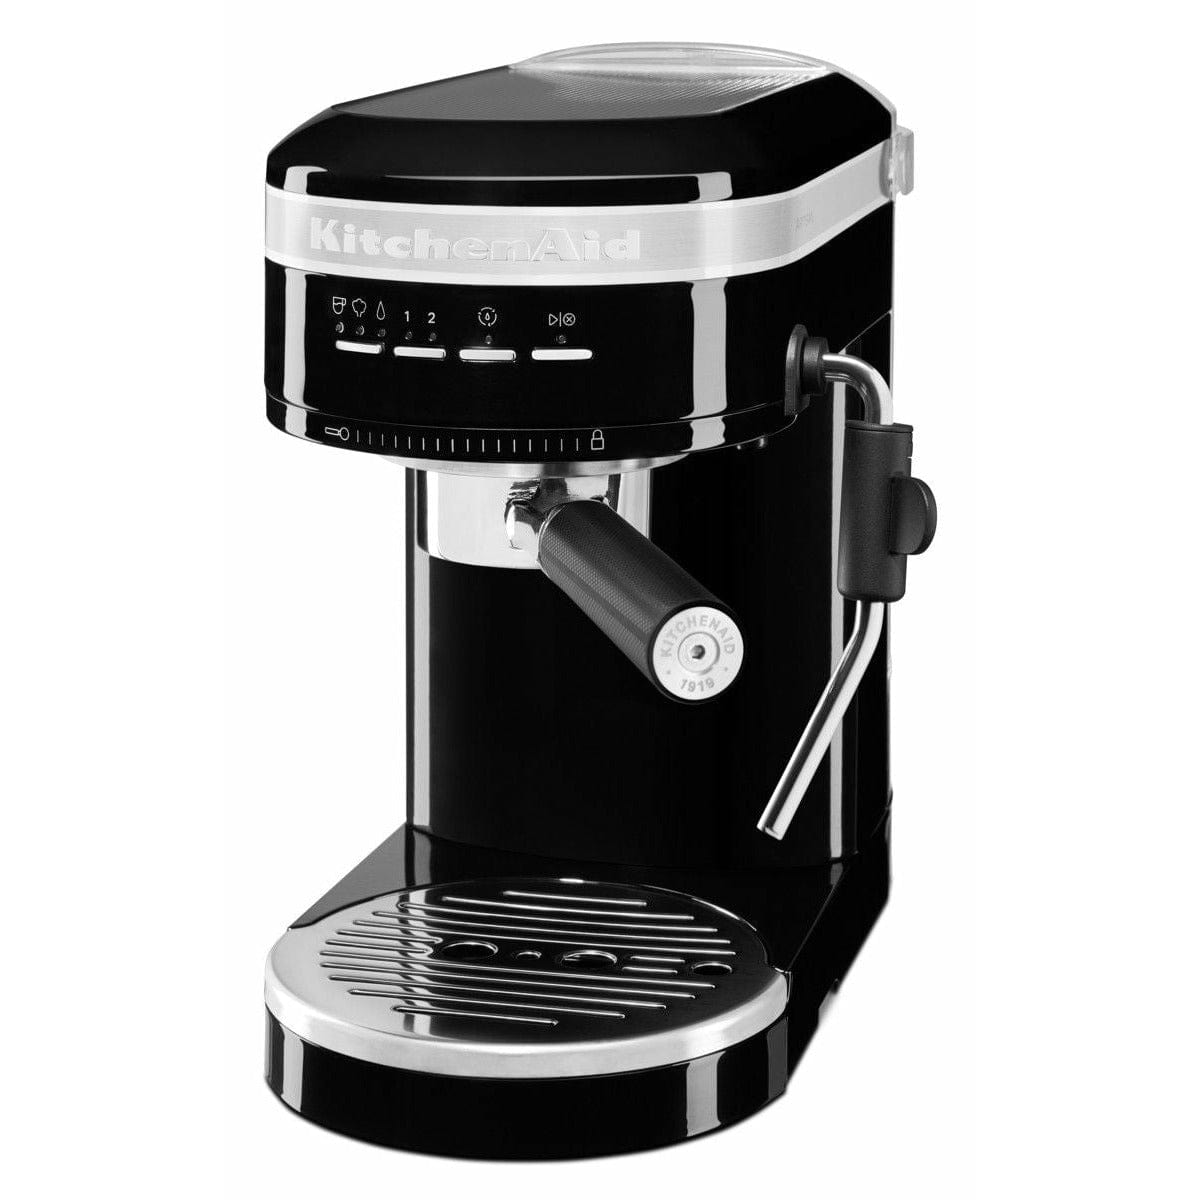 KitchenAid 5KES6503 Artisan Espresso Machine, gjutjärnsvart